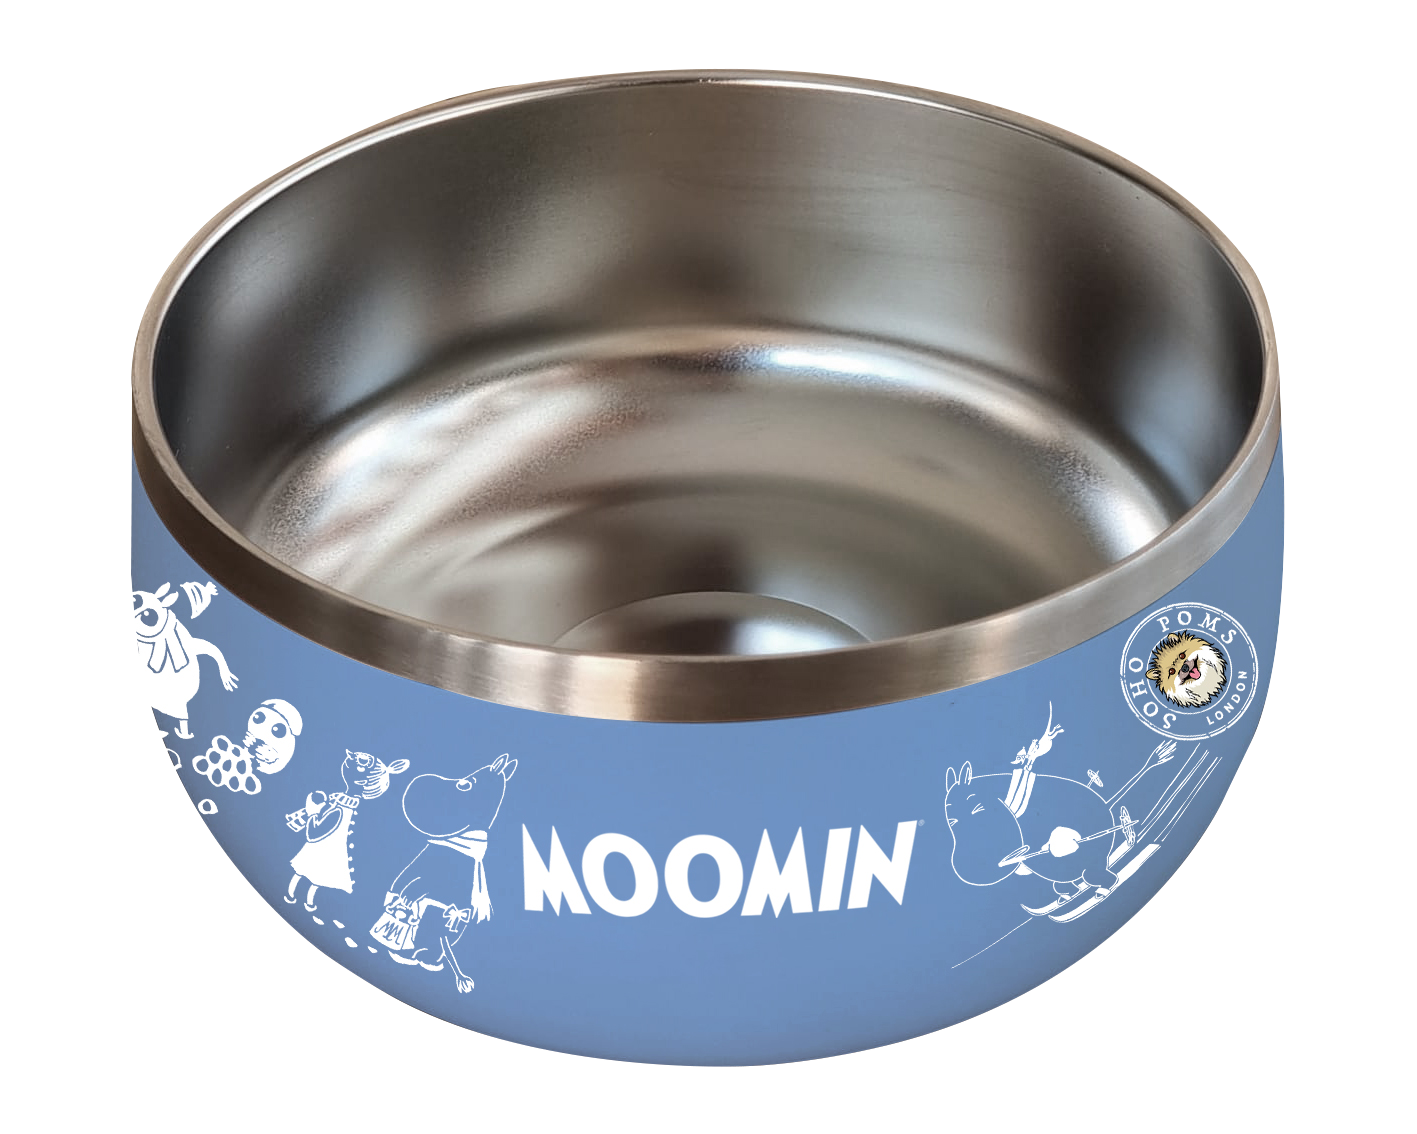 Moomins Lunar Bowl Blue by SohoPoms